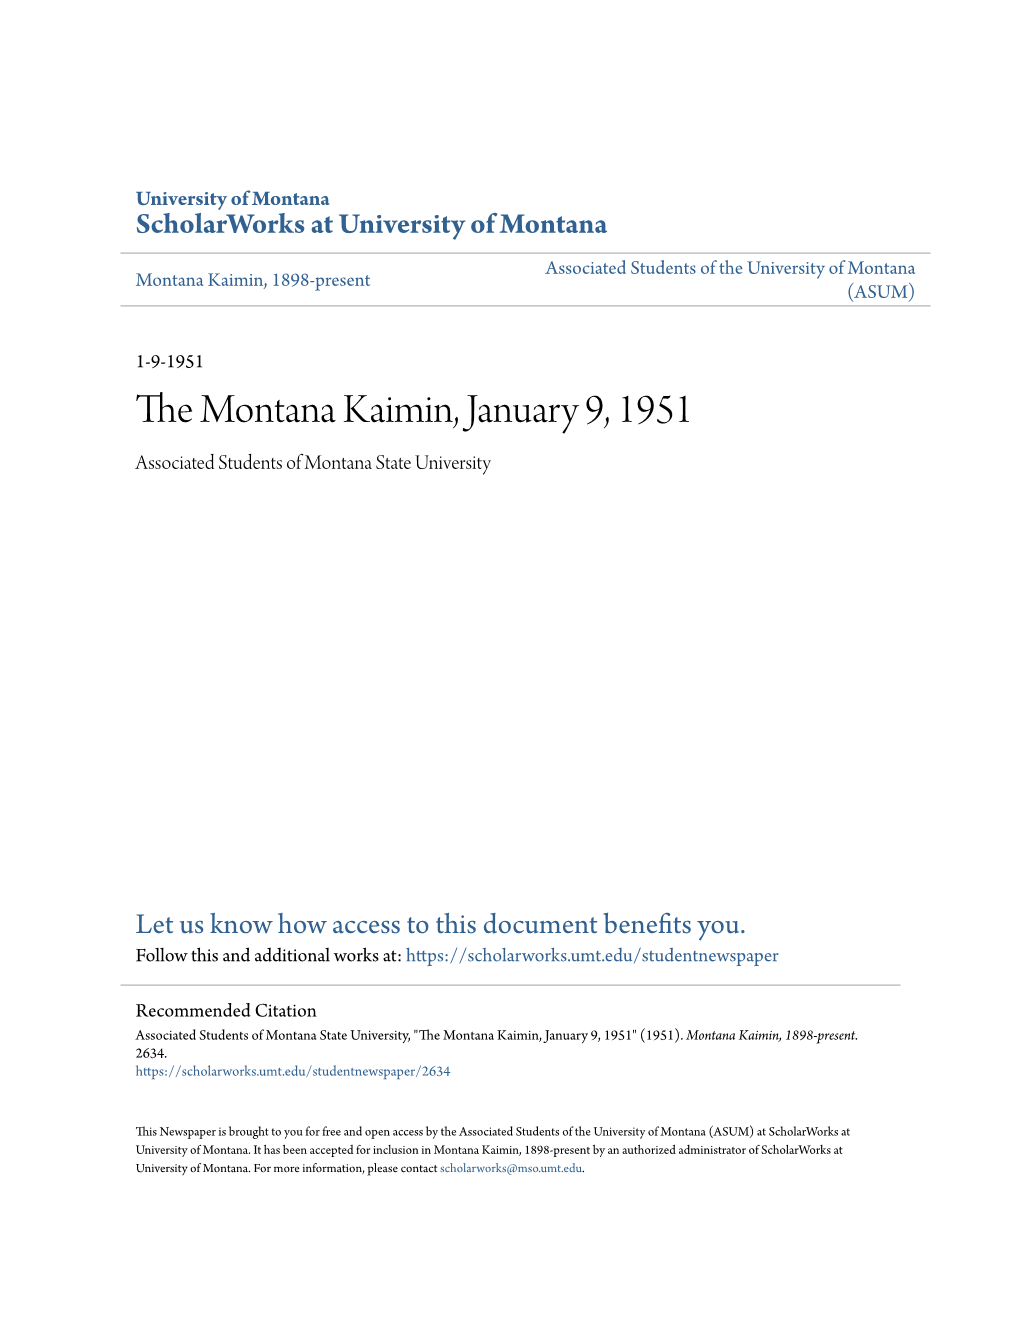 The Montana Kaimin, January 9, 1951